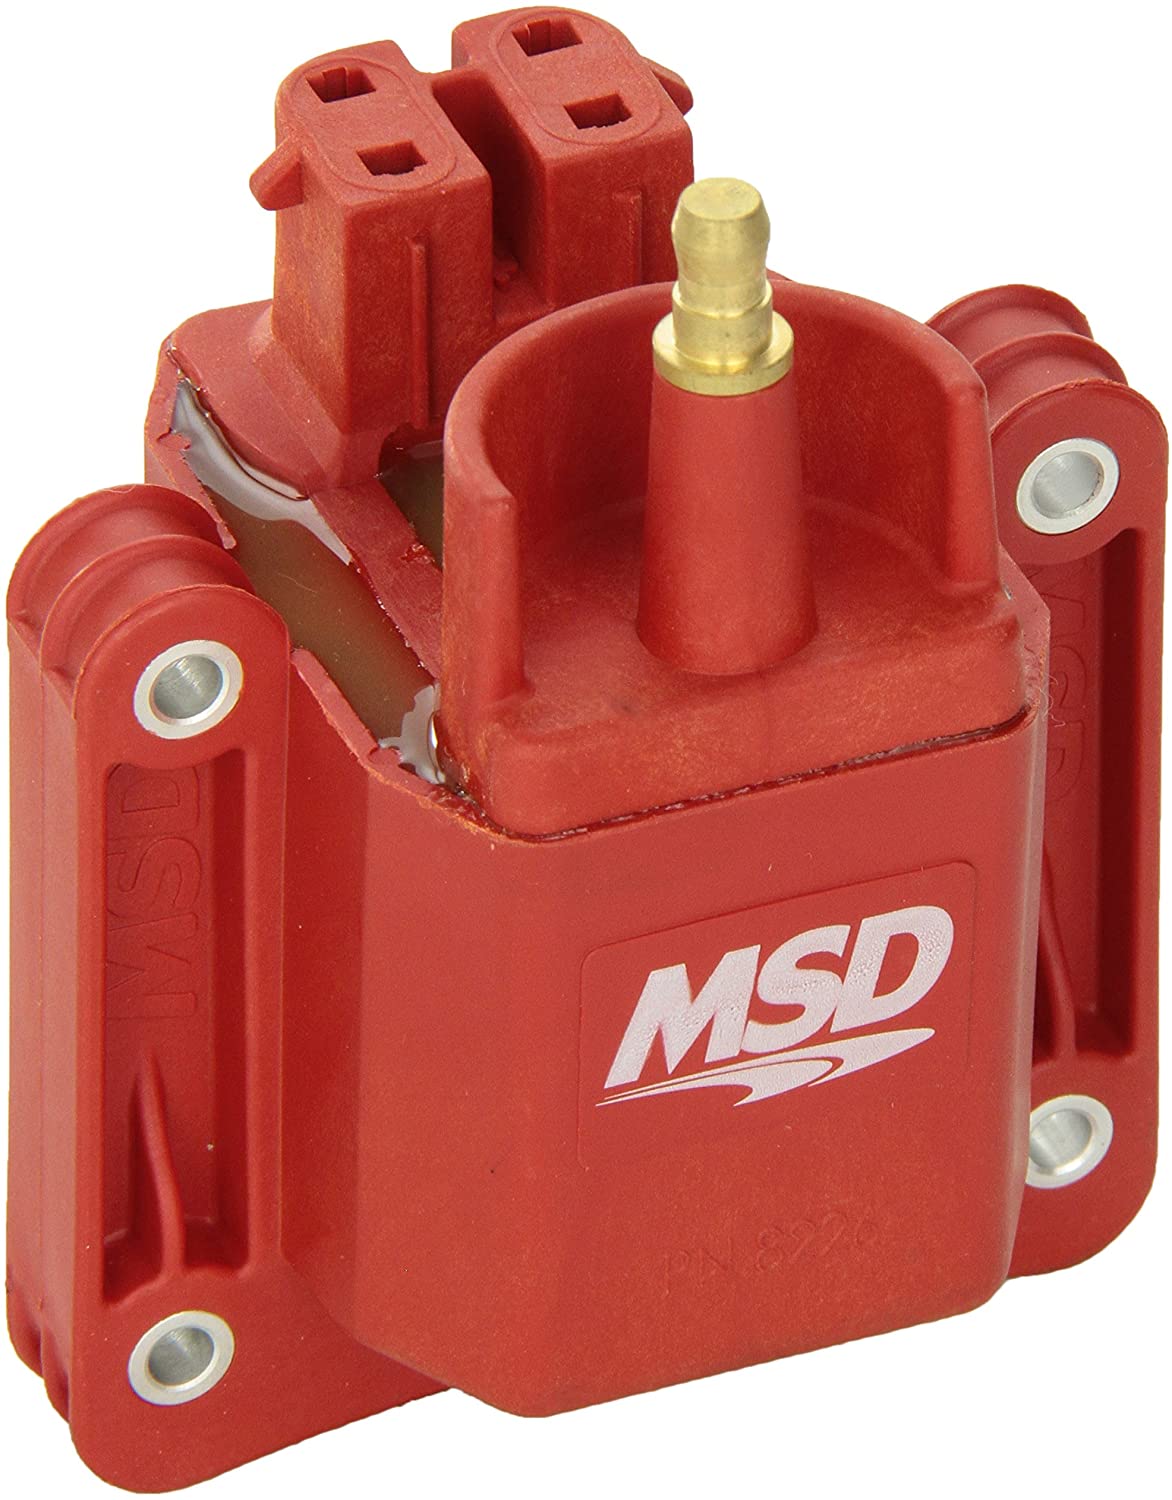 MSD 8226 Blaster Ignition Coil